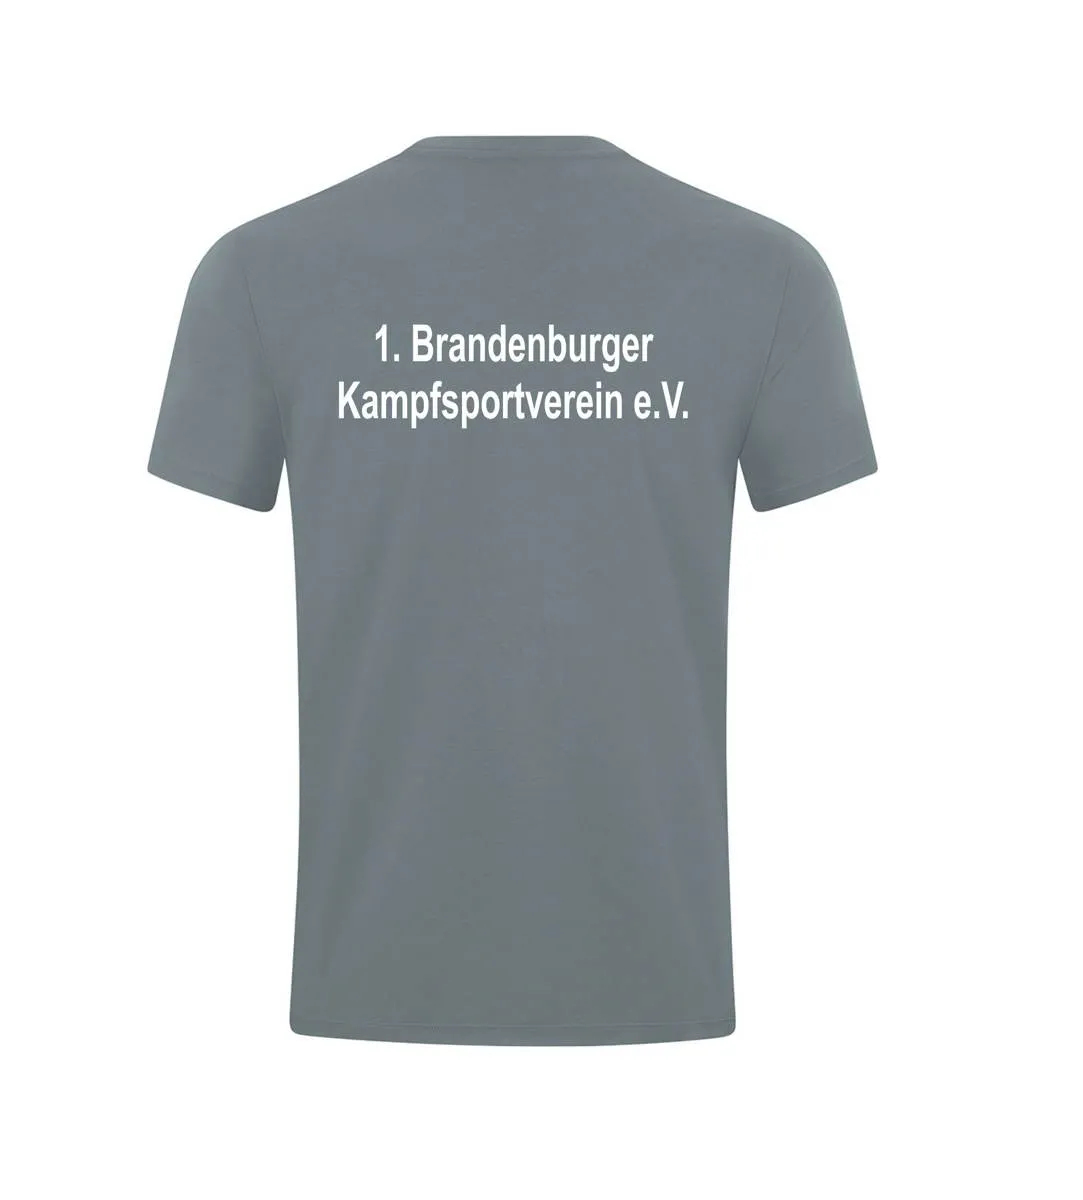 JAKO T-Shirt Power gris Association d arts martiaux Brandenburger